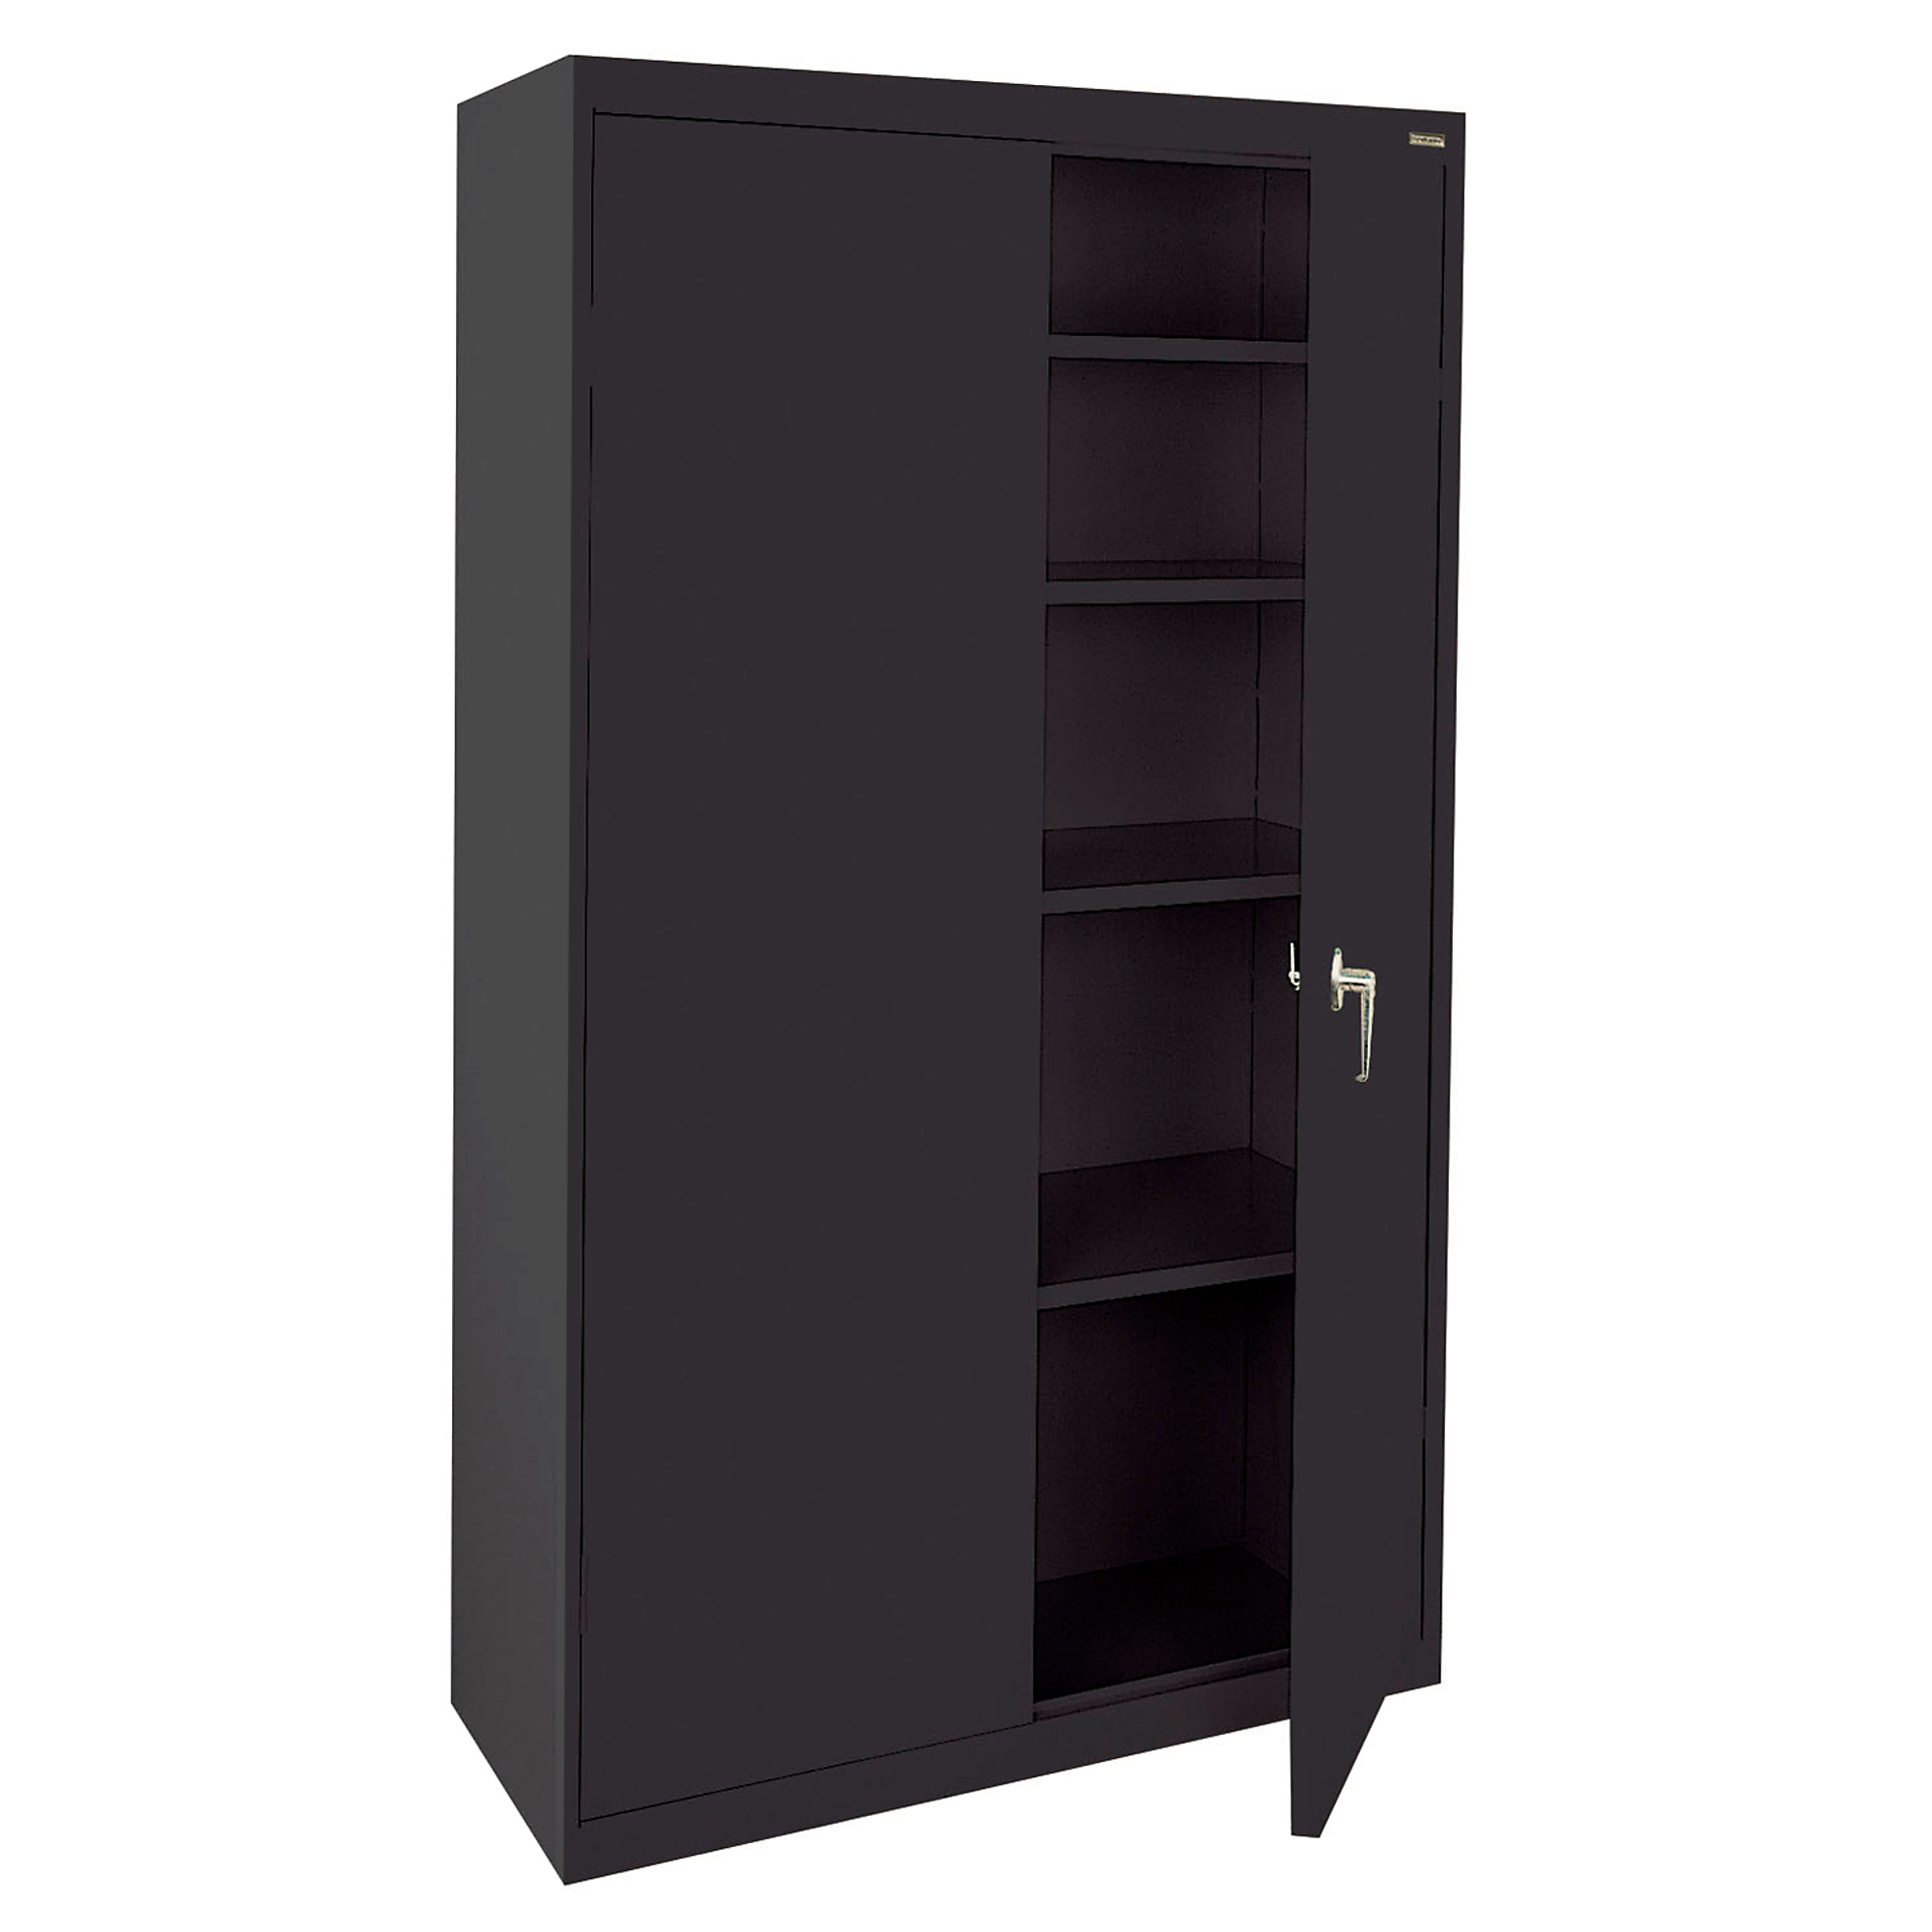 Sandusky Lee Sandusky, Value Line Cabinet 36x18x72 Black, Height 72 in, Width 36 in, Color Black, Model VF41361872-09